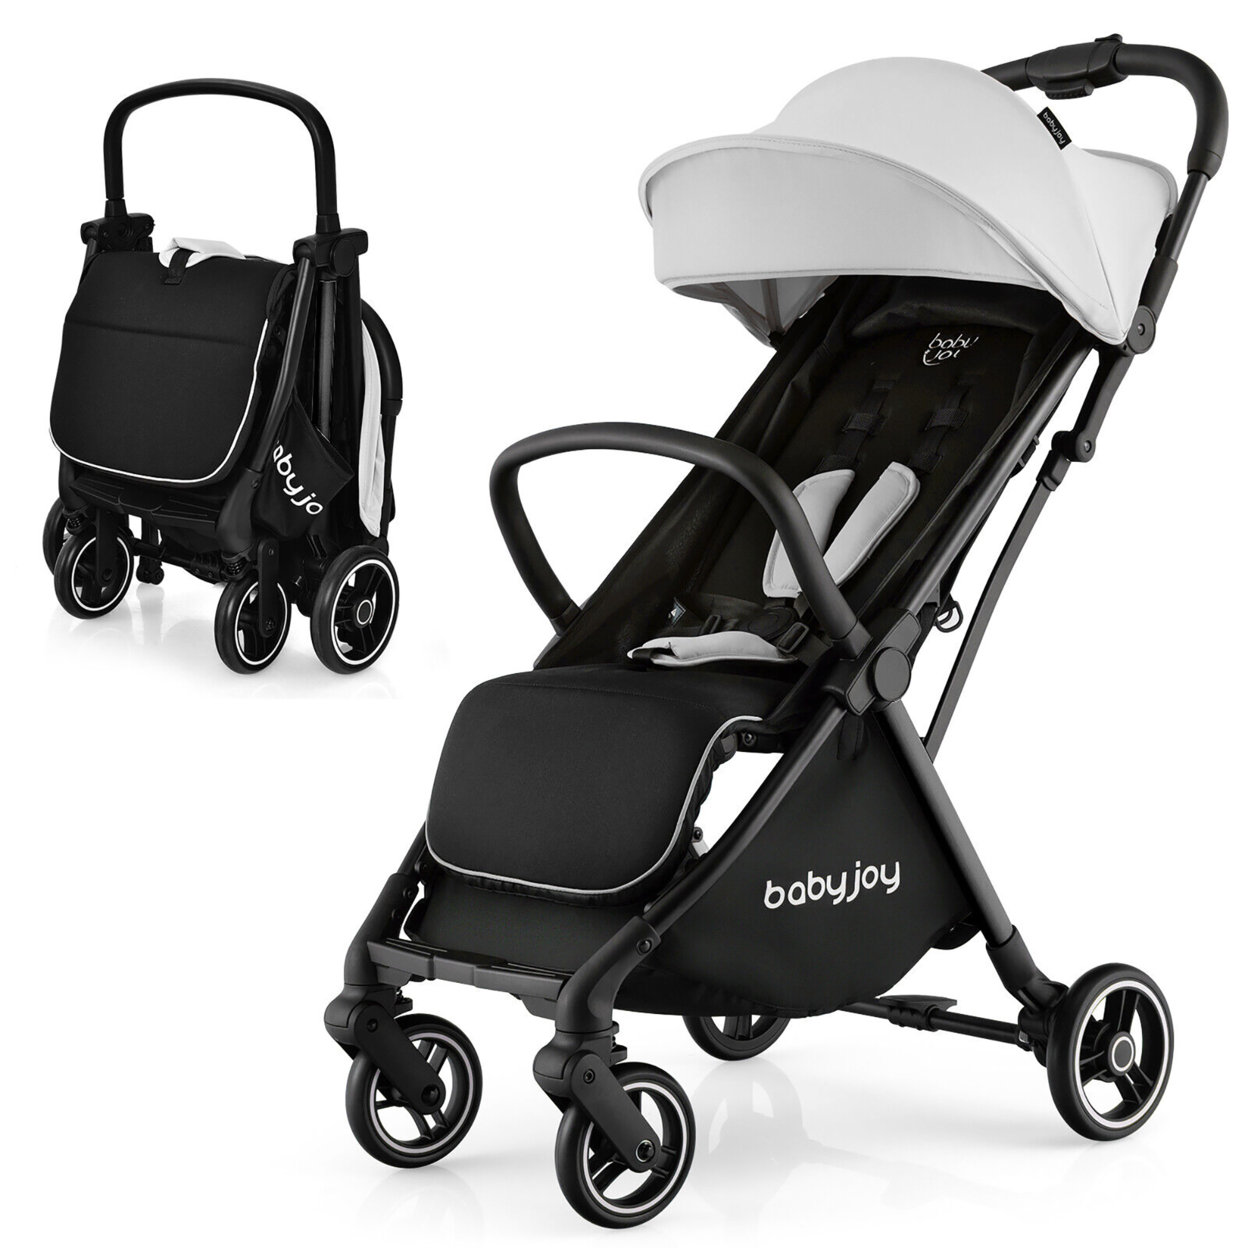 Portable Baby Stroller One-Hand Fold Pushchair W/ Aluminum Frame - Blue